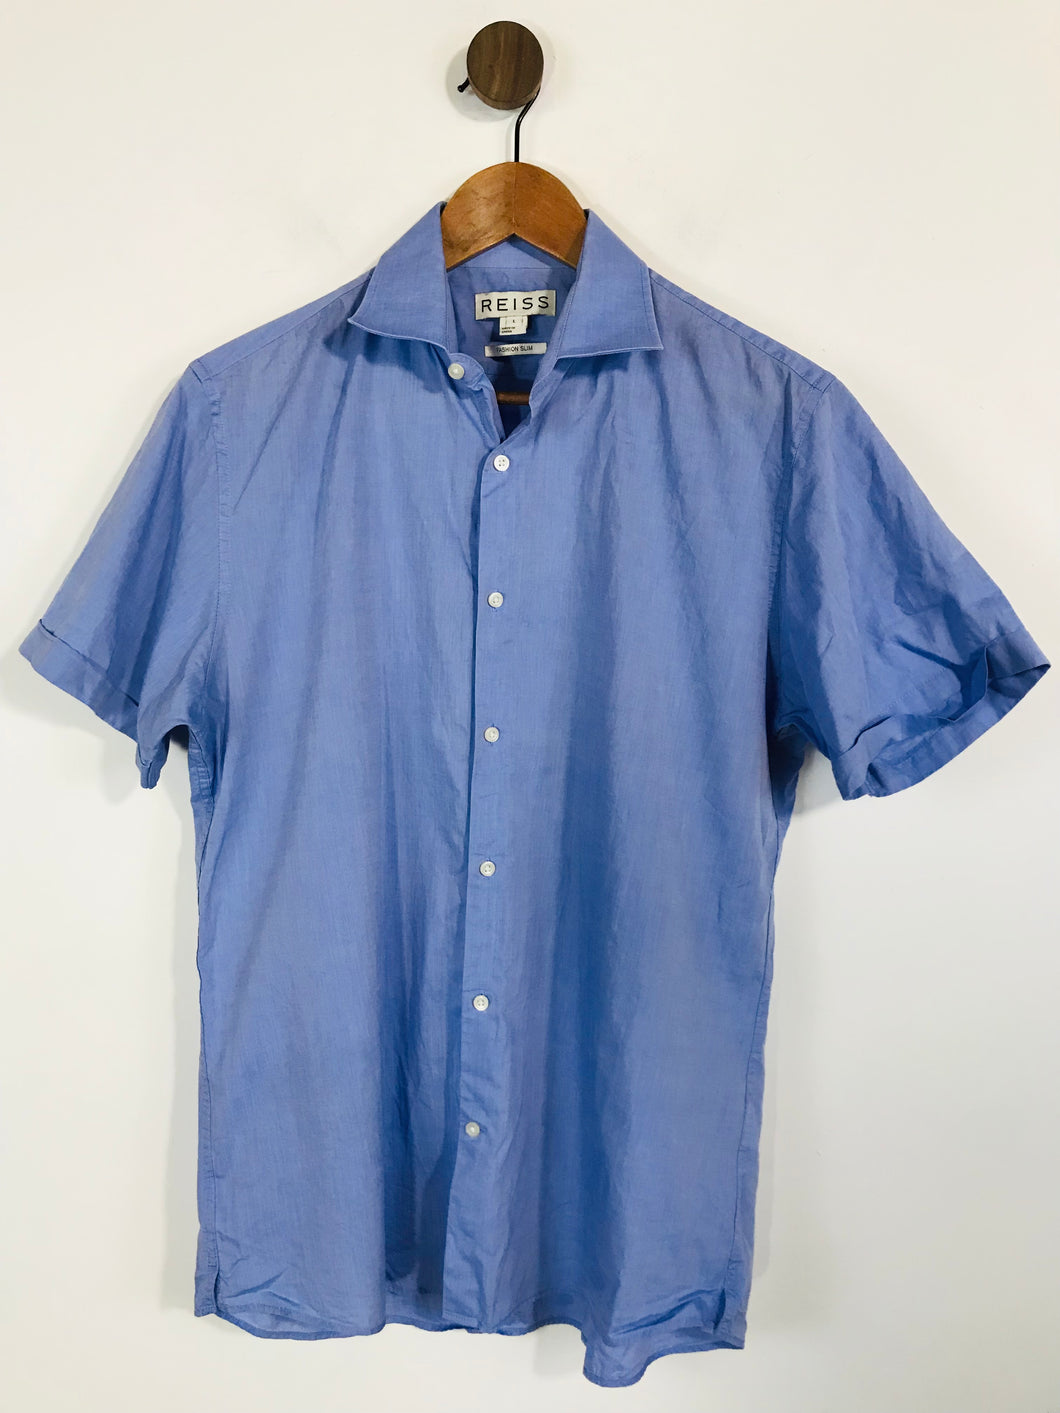 Reiss Men's Slim Fit Short Sleeve Button-Up Shirt | L | Blue